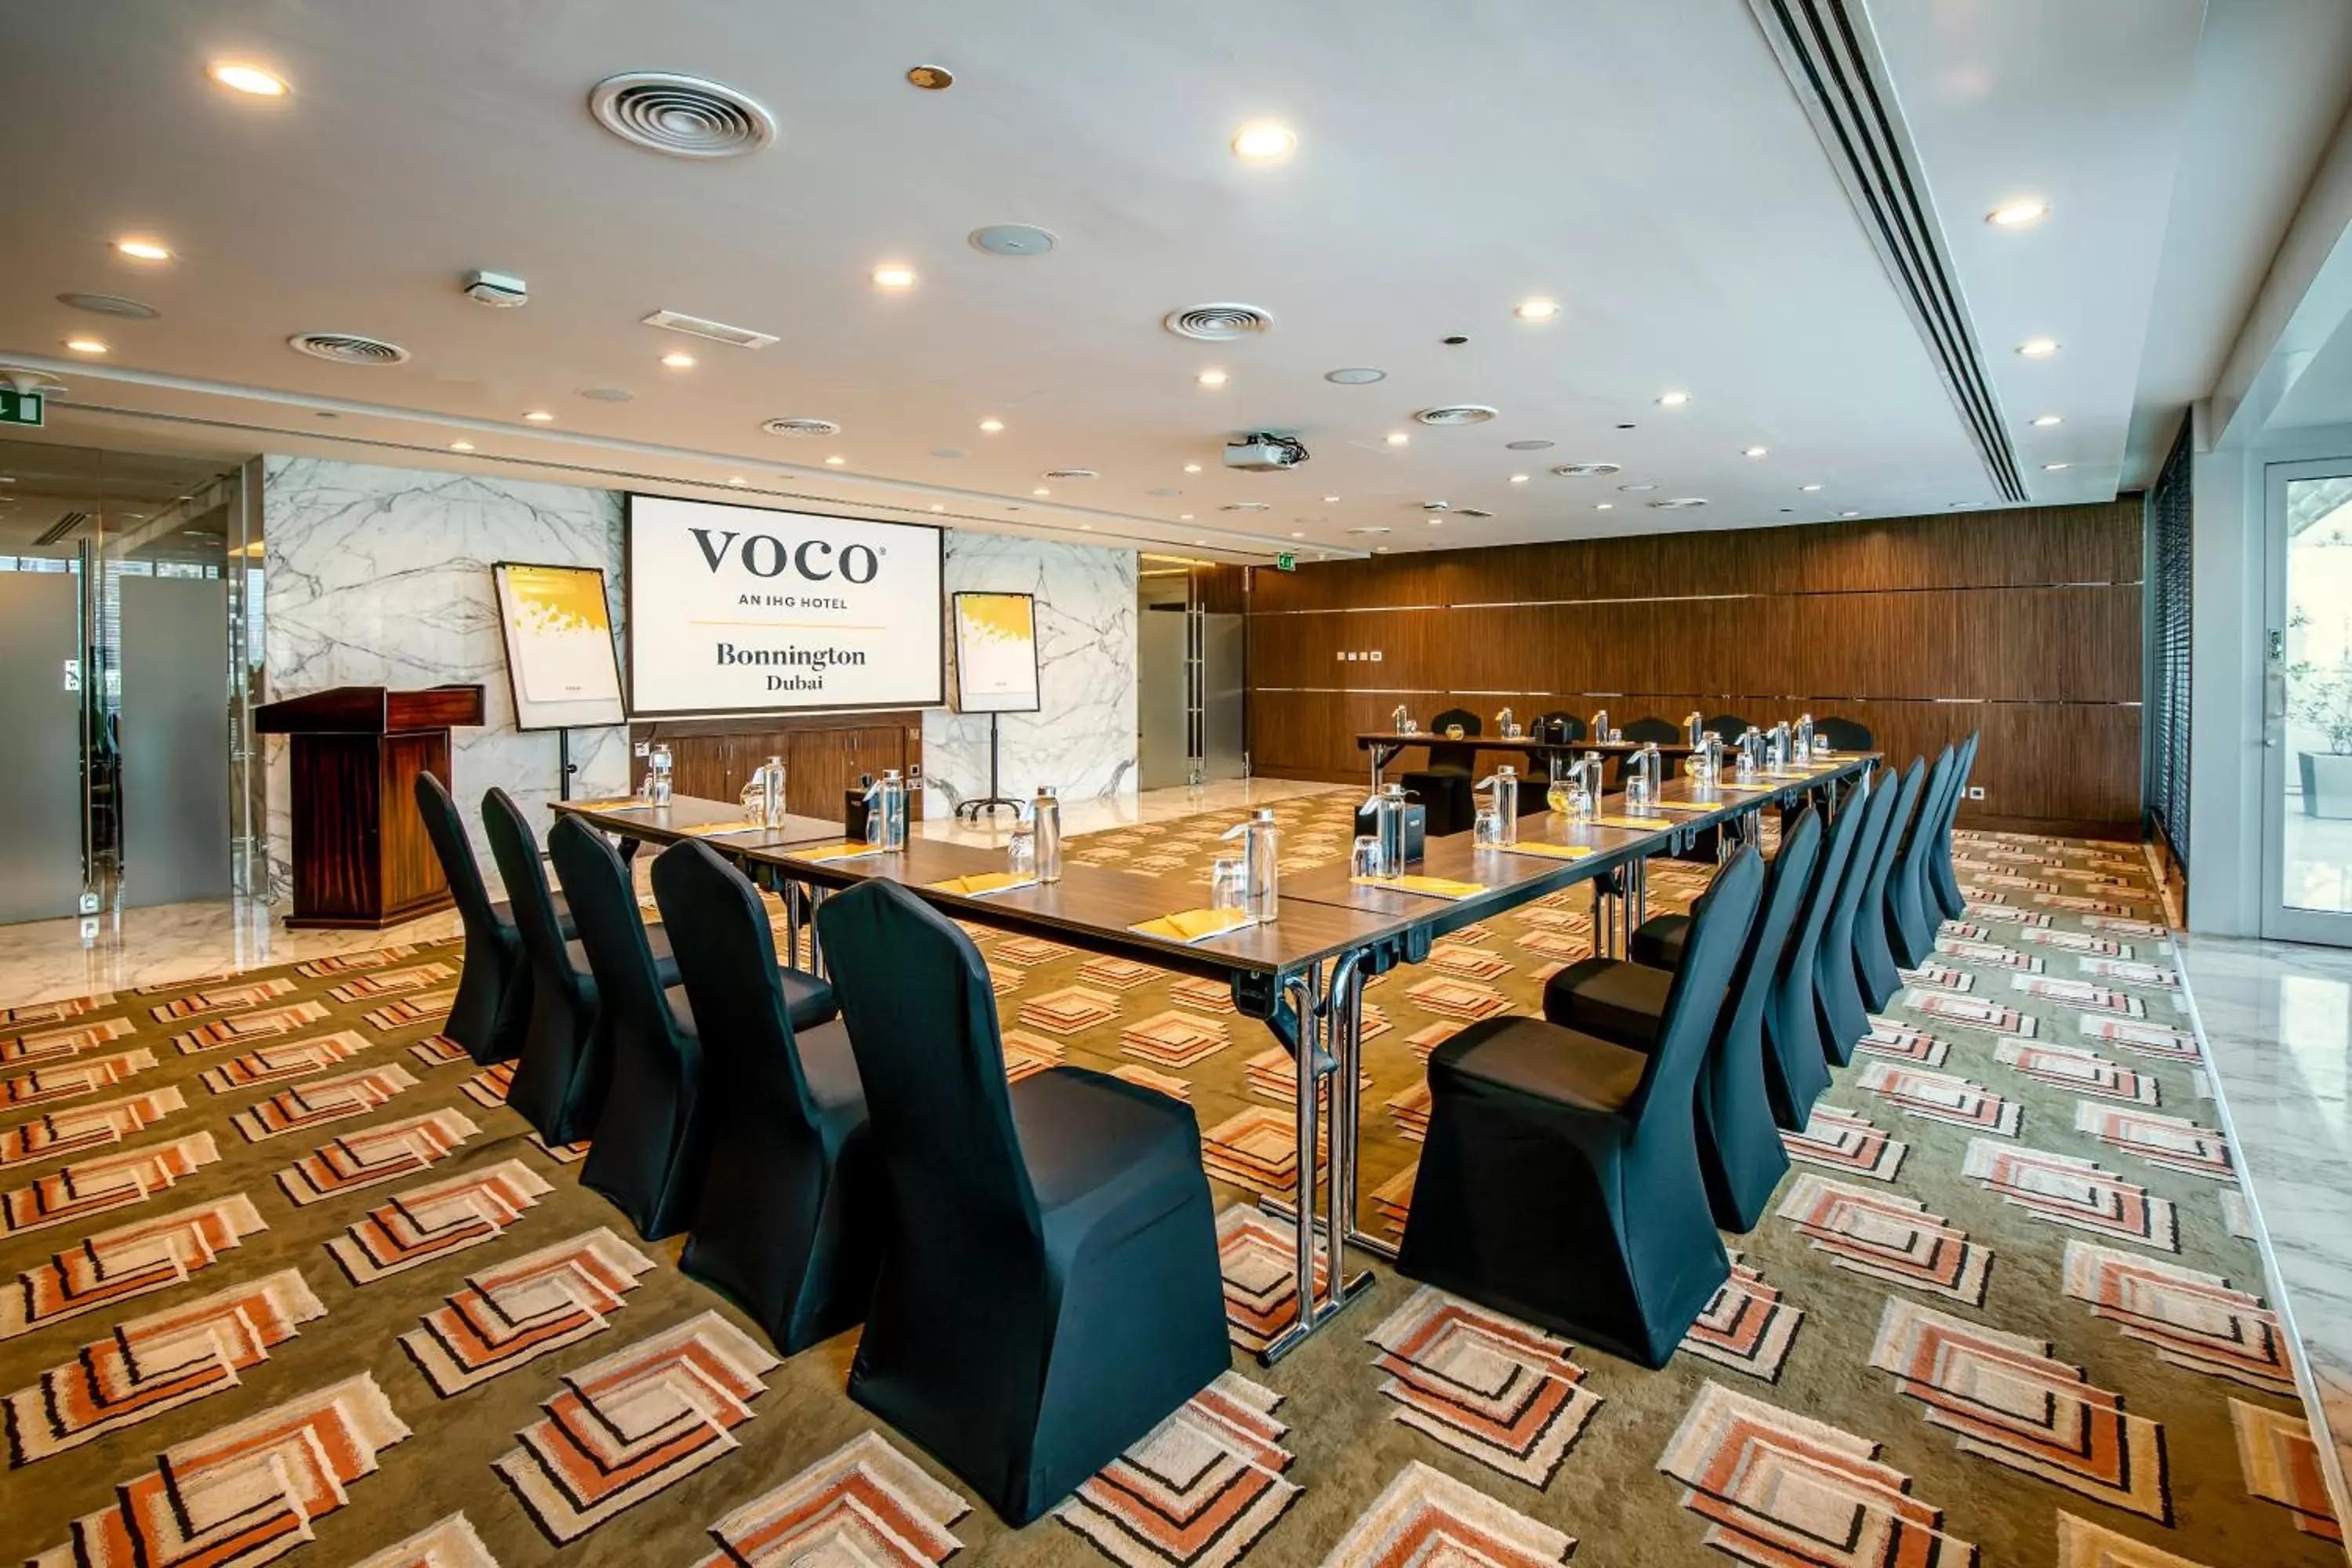 Meeting/conference room in voco - Bonnington Dubai, an IHG Hotel